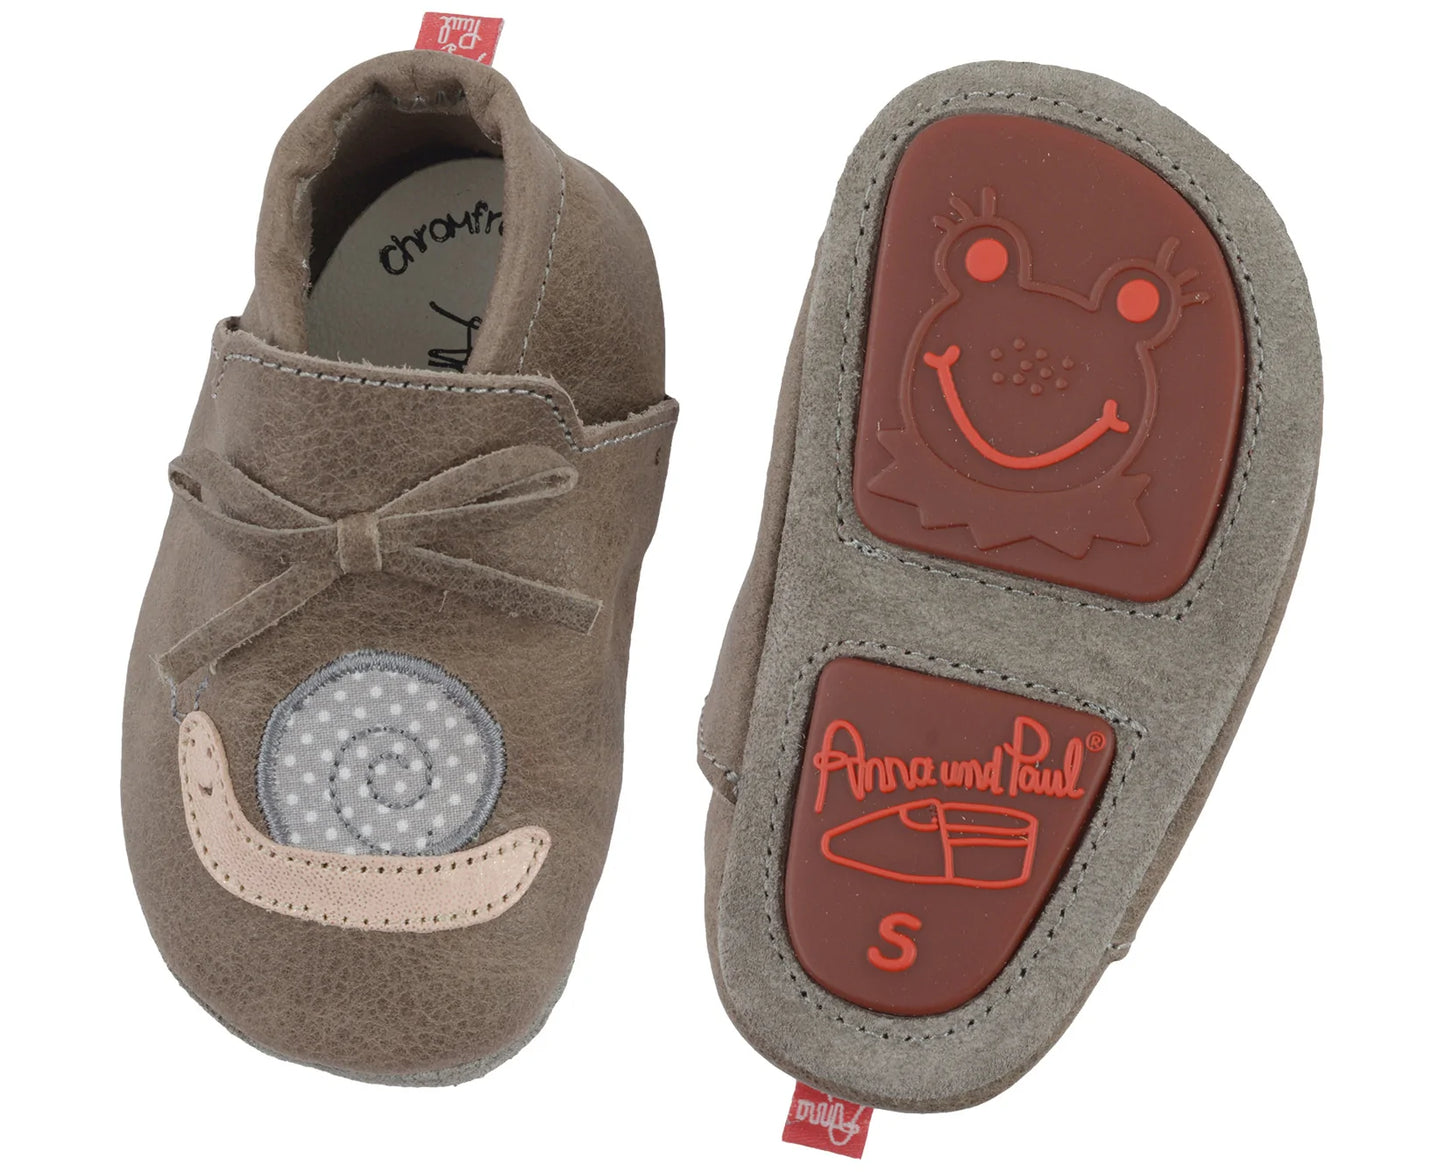 Babymode Kindermode Krabbelschuhe Lauflernschuhe erste Schuhe Anna und Paul